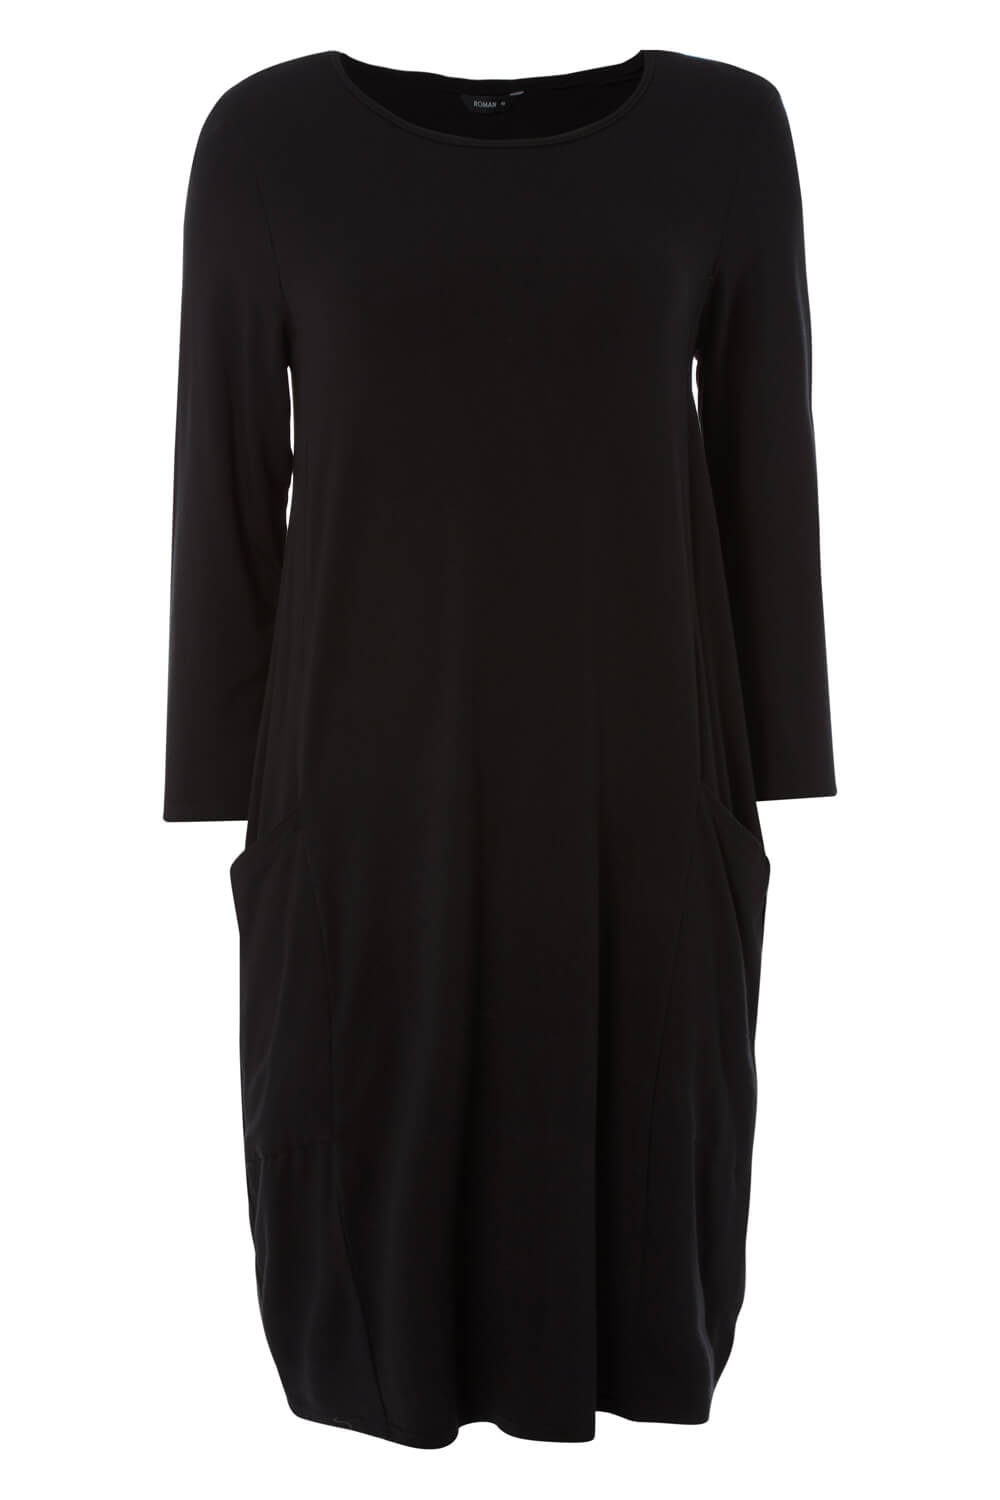 Black  3/4 Sleeve Slouch Dress, Image 4 of 4